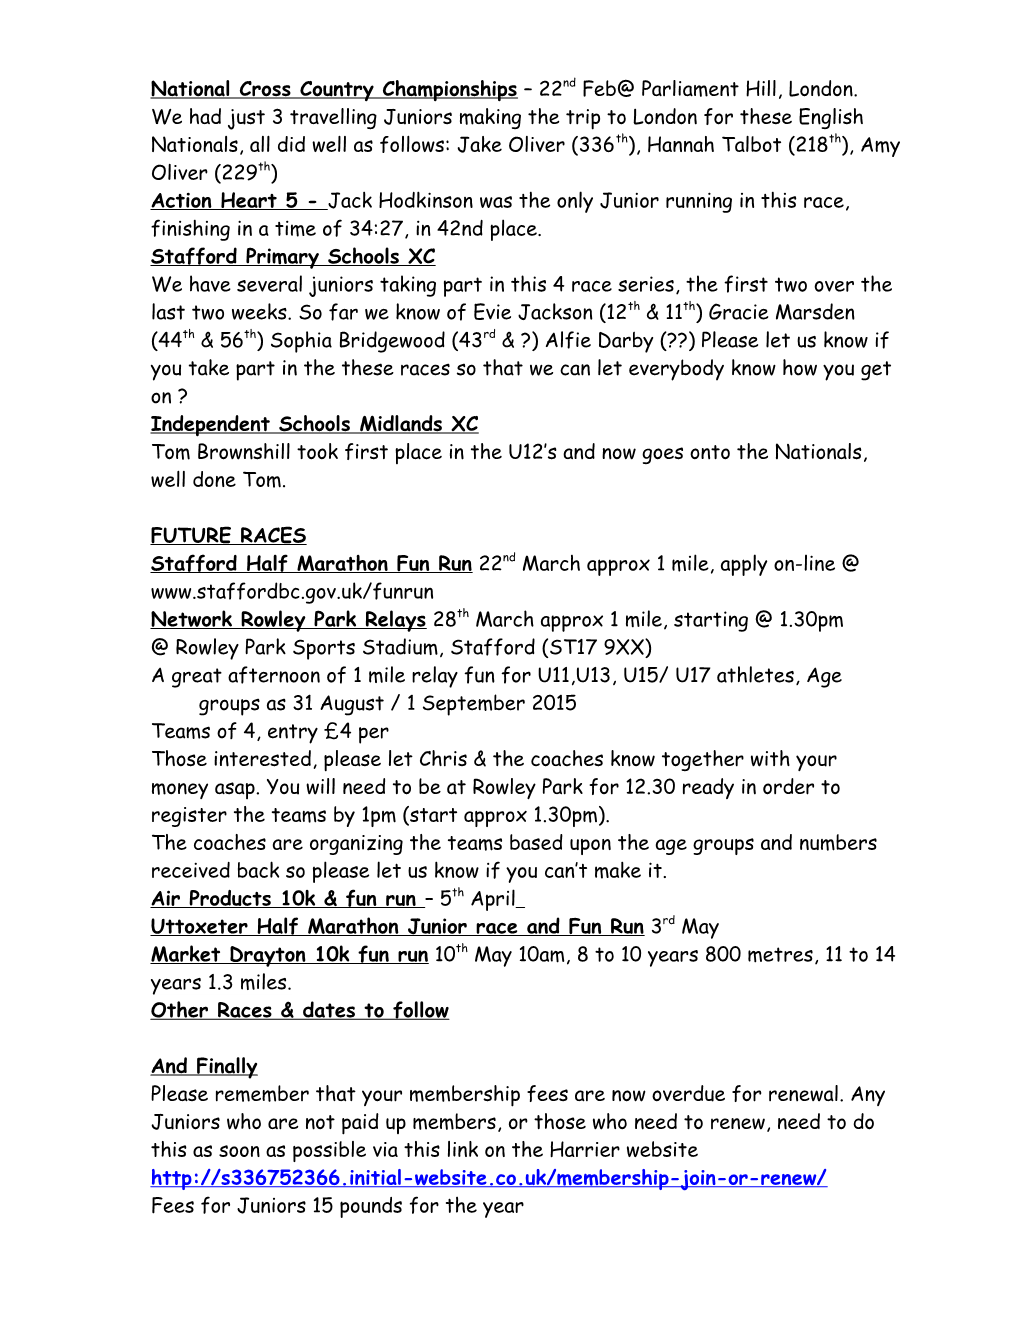 Stafford Harriers Junior Newsletter January 2014